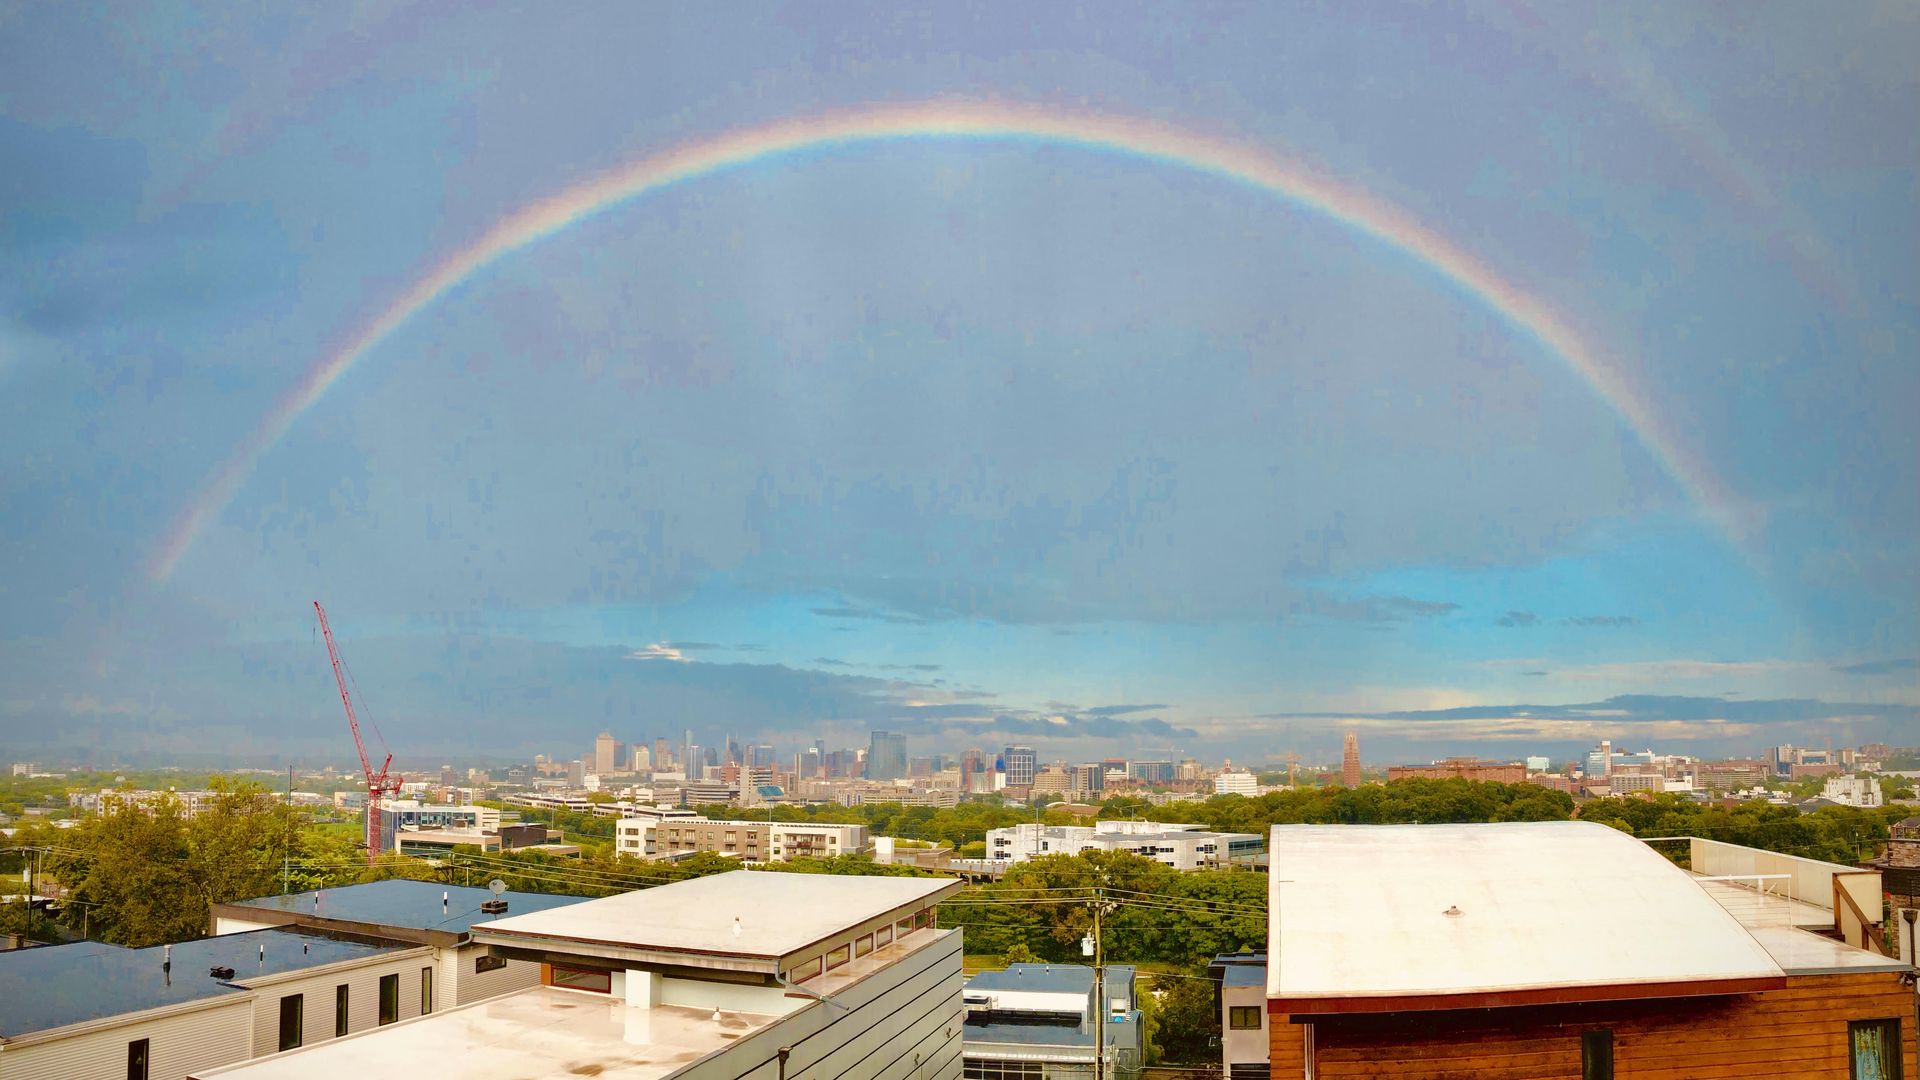 Image of a rainbow over the Nashville skyline.